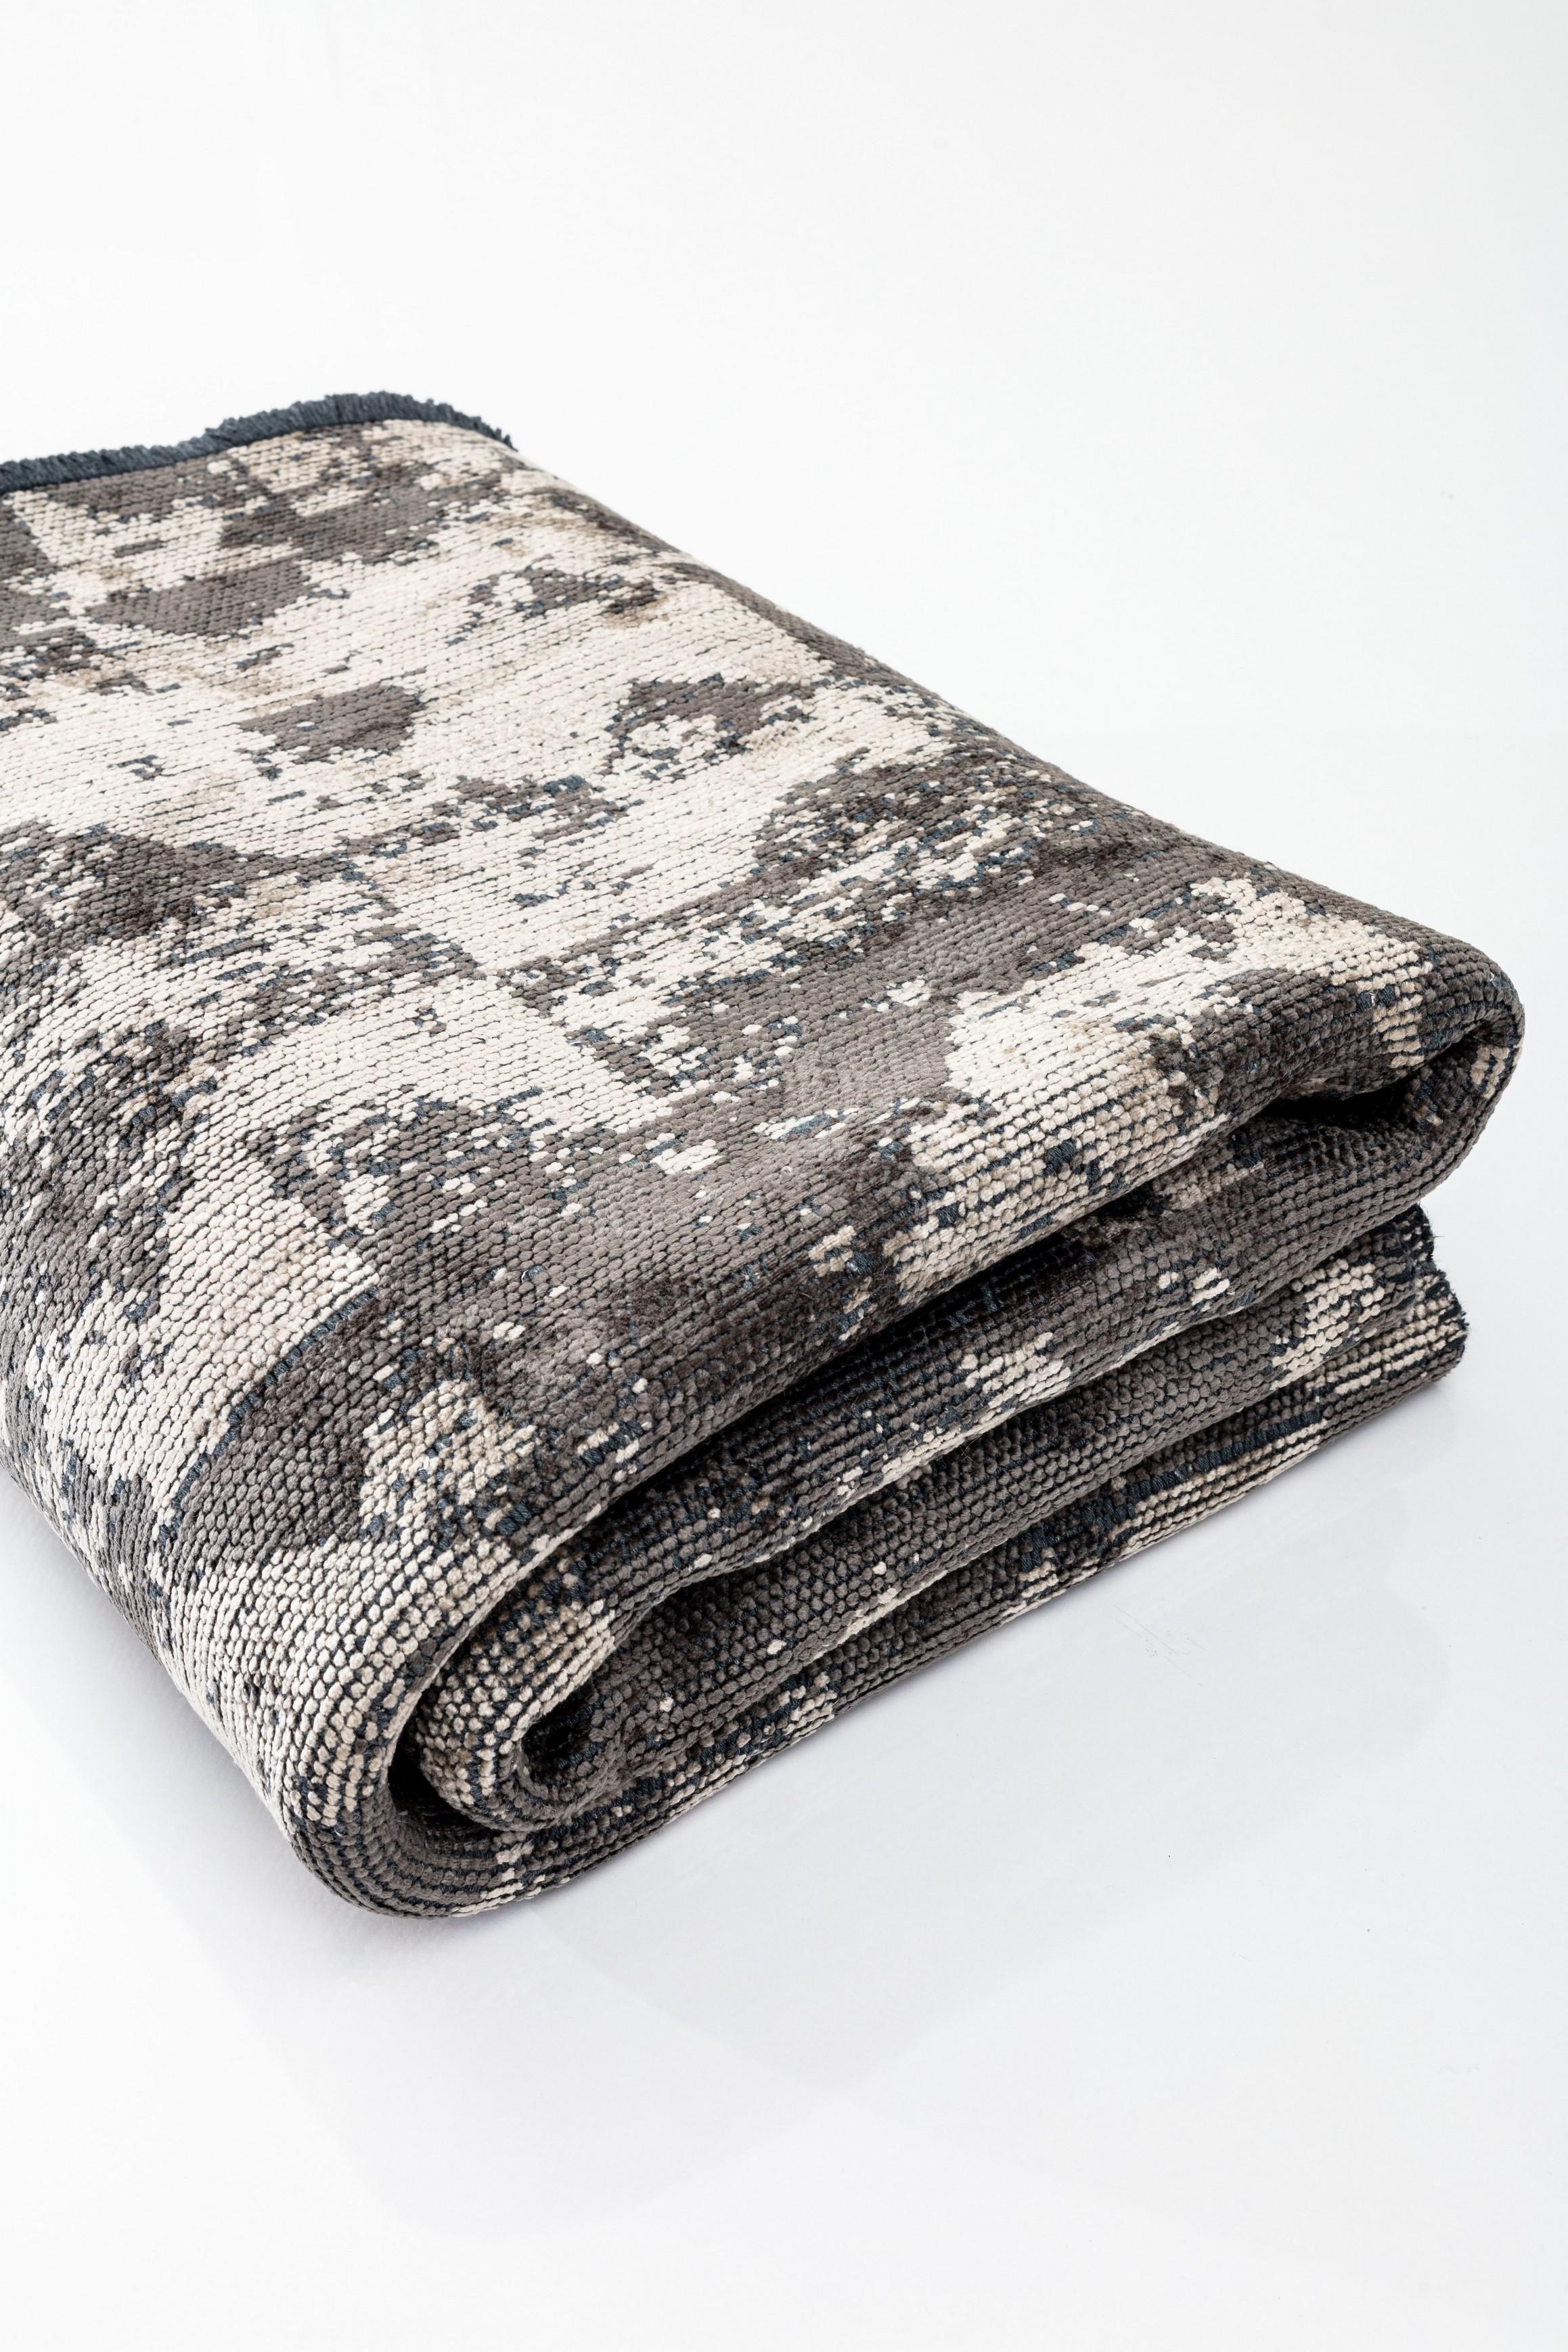 Im Angebot: Modern Camouflage Luxury Hand-Finished Area Rug,  (Grau) 4